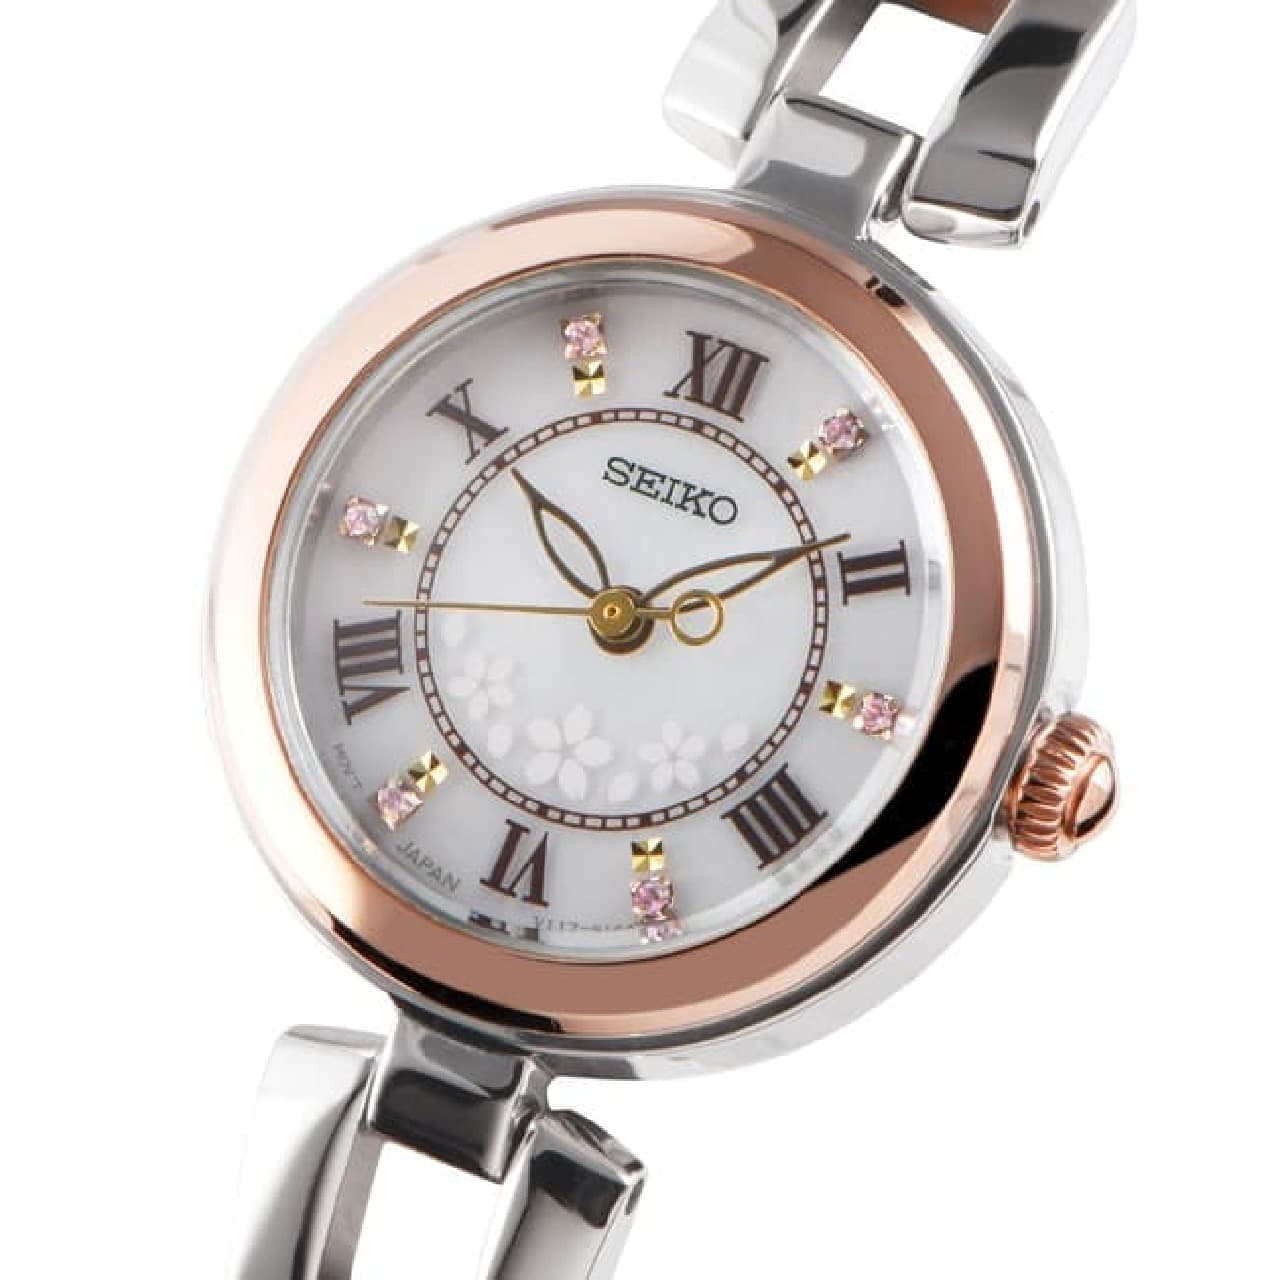 「2022 SAKURA Blooming 限定モデル」セイコーウオッチから -- 春を彩る桜モチーフの腕時計